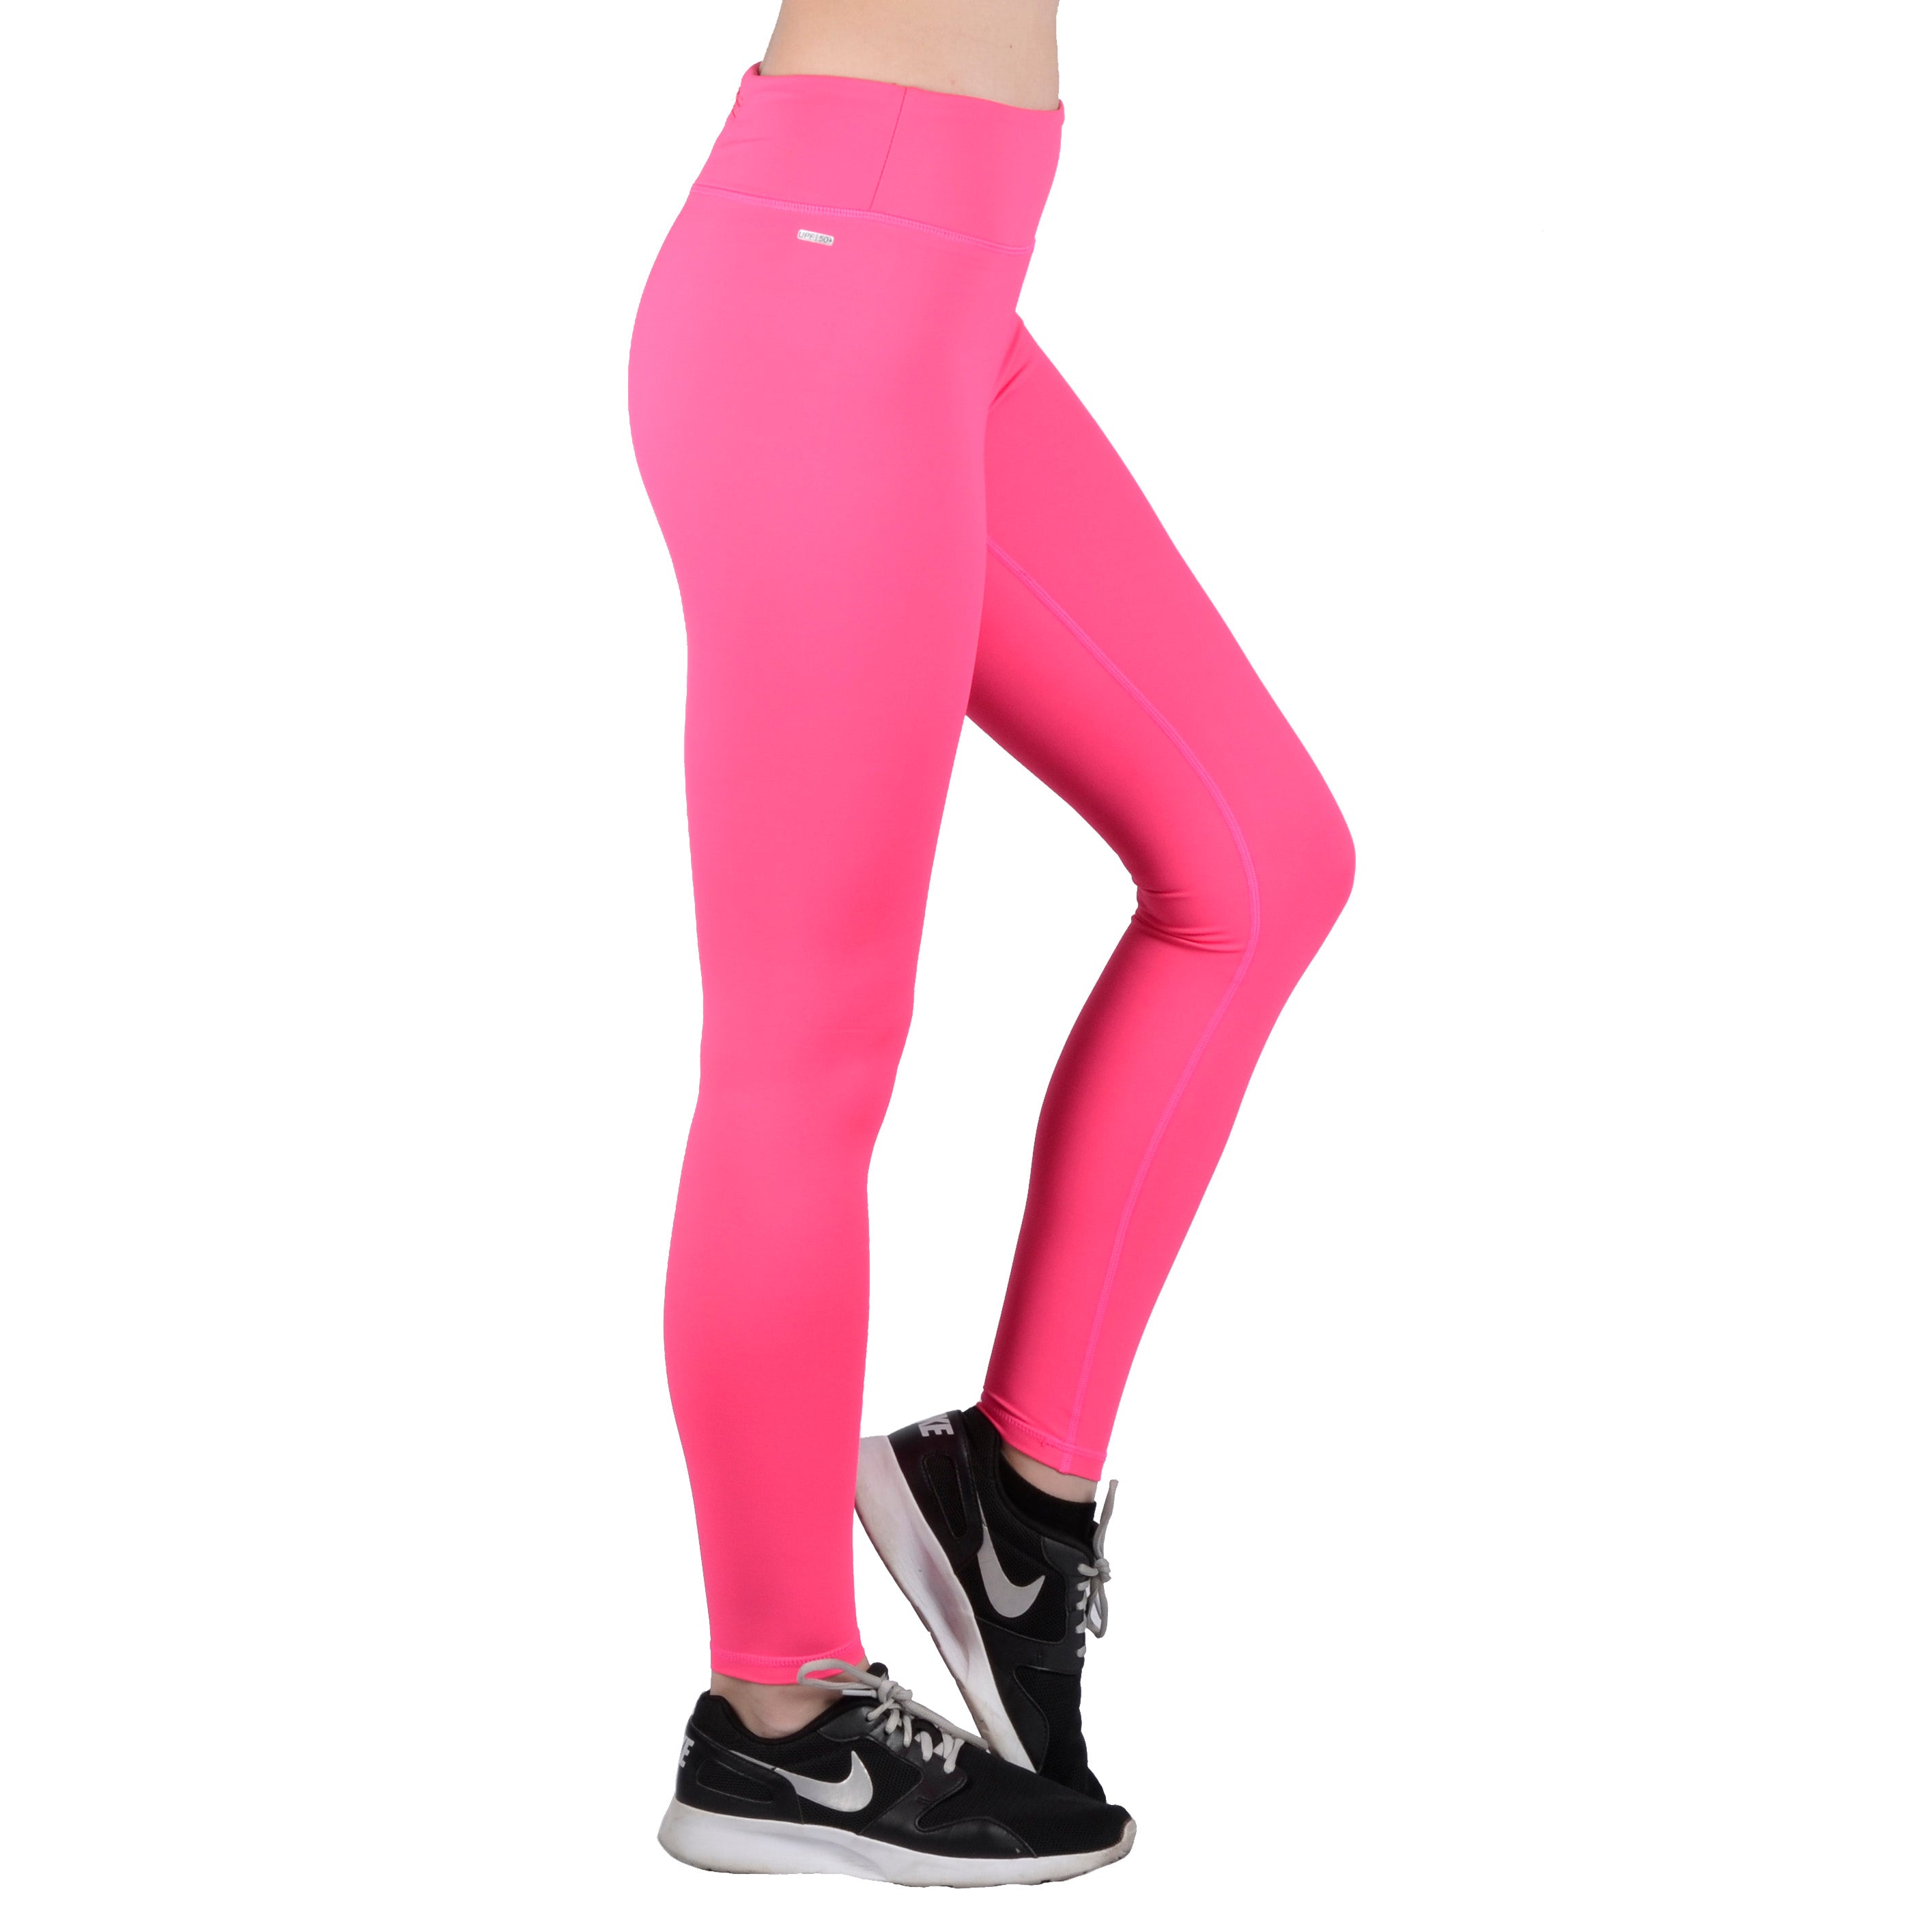 New Mix Compression Leggings Women's Athletic Athleisure Workout Wear Sz Lg/ XL